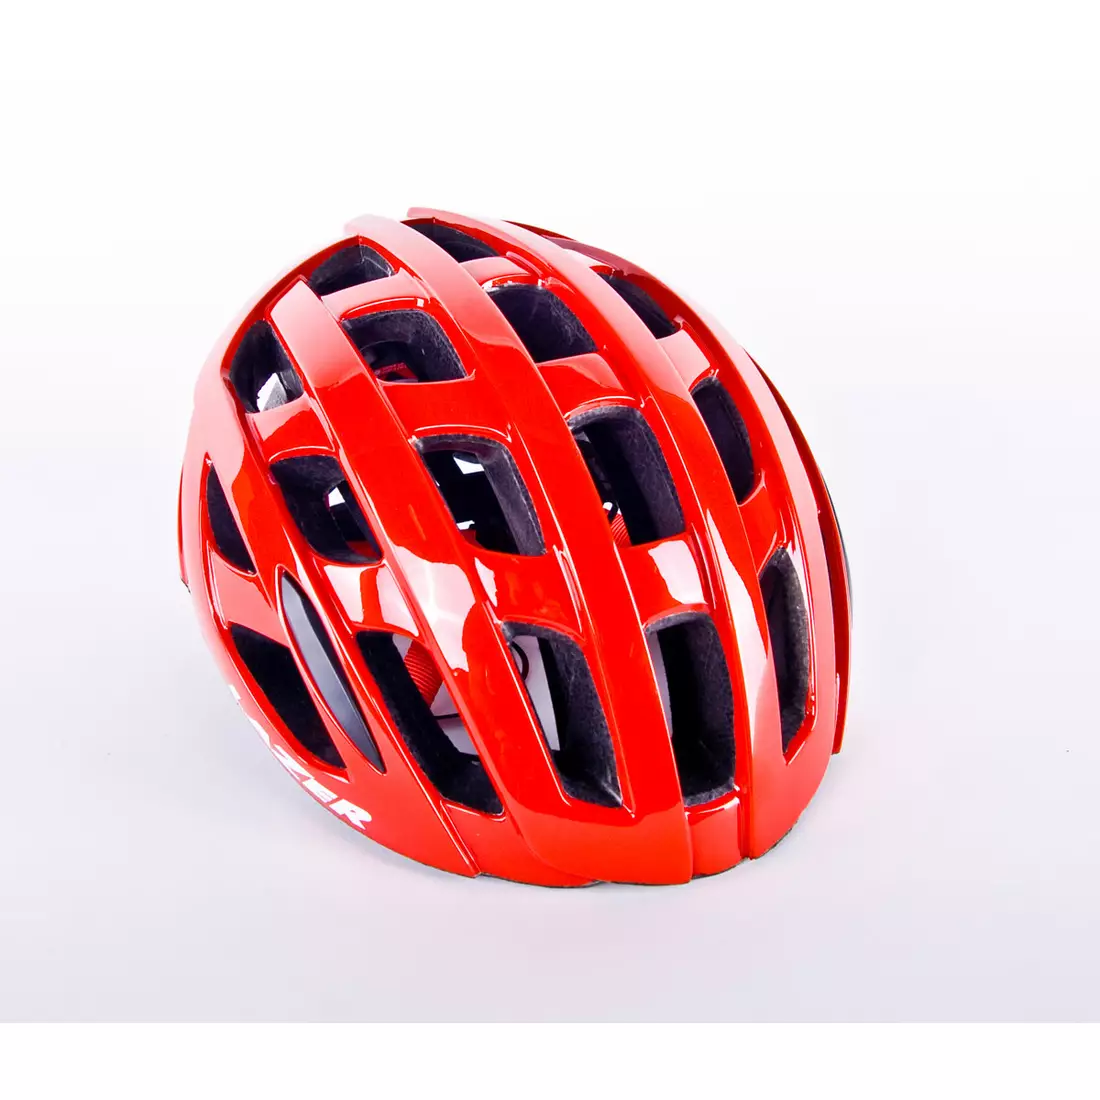 LAZER TONIC TS+ road bike helmet red gloss